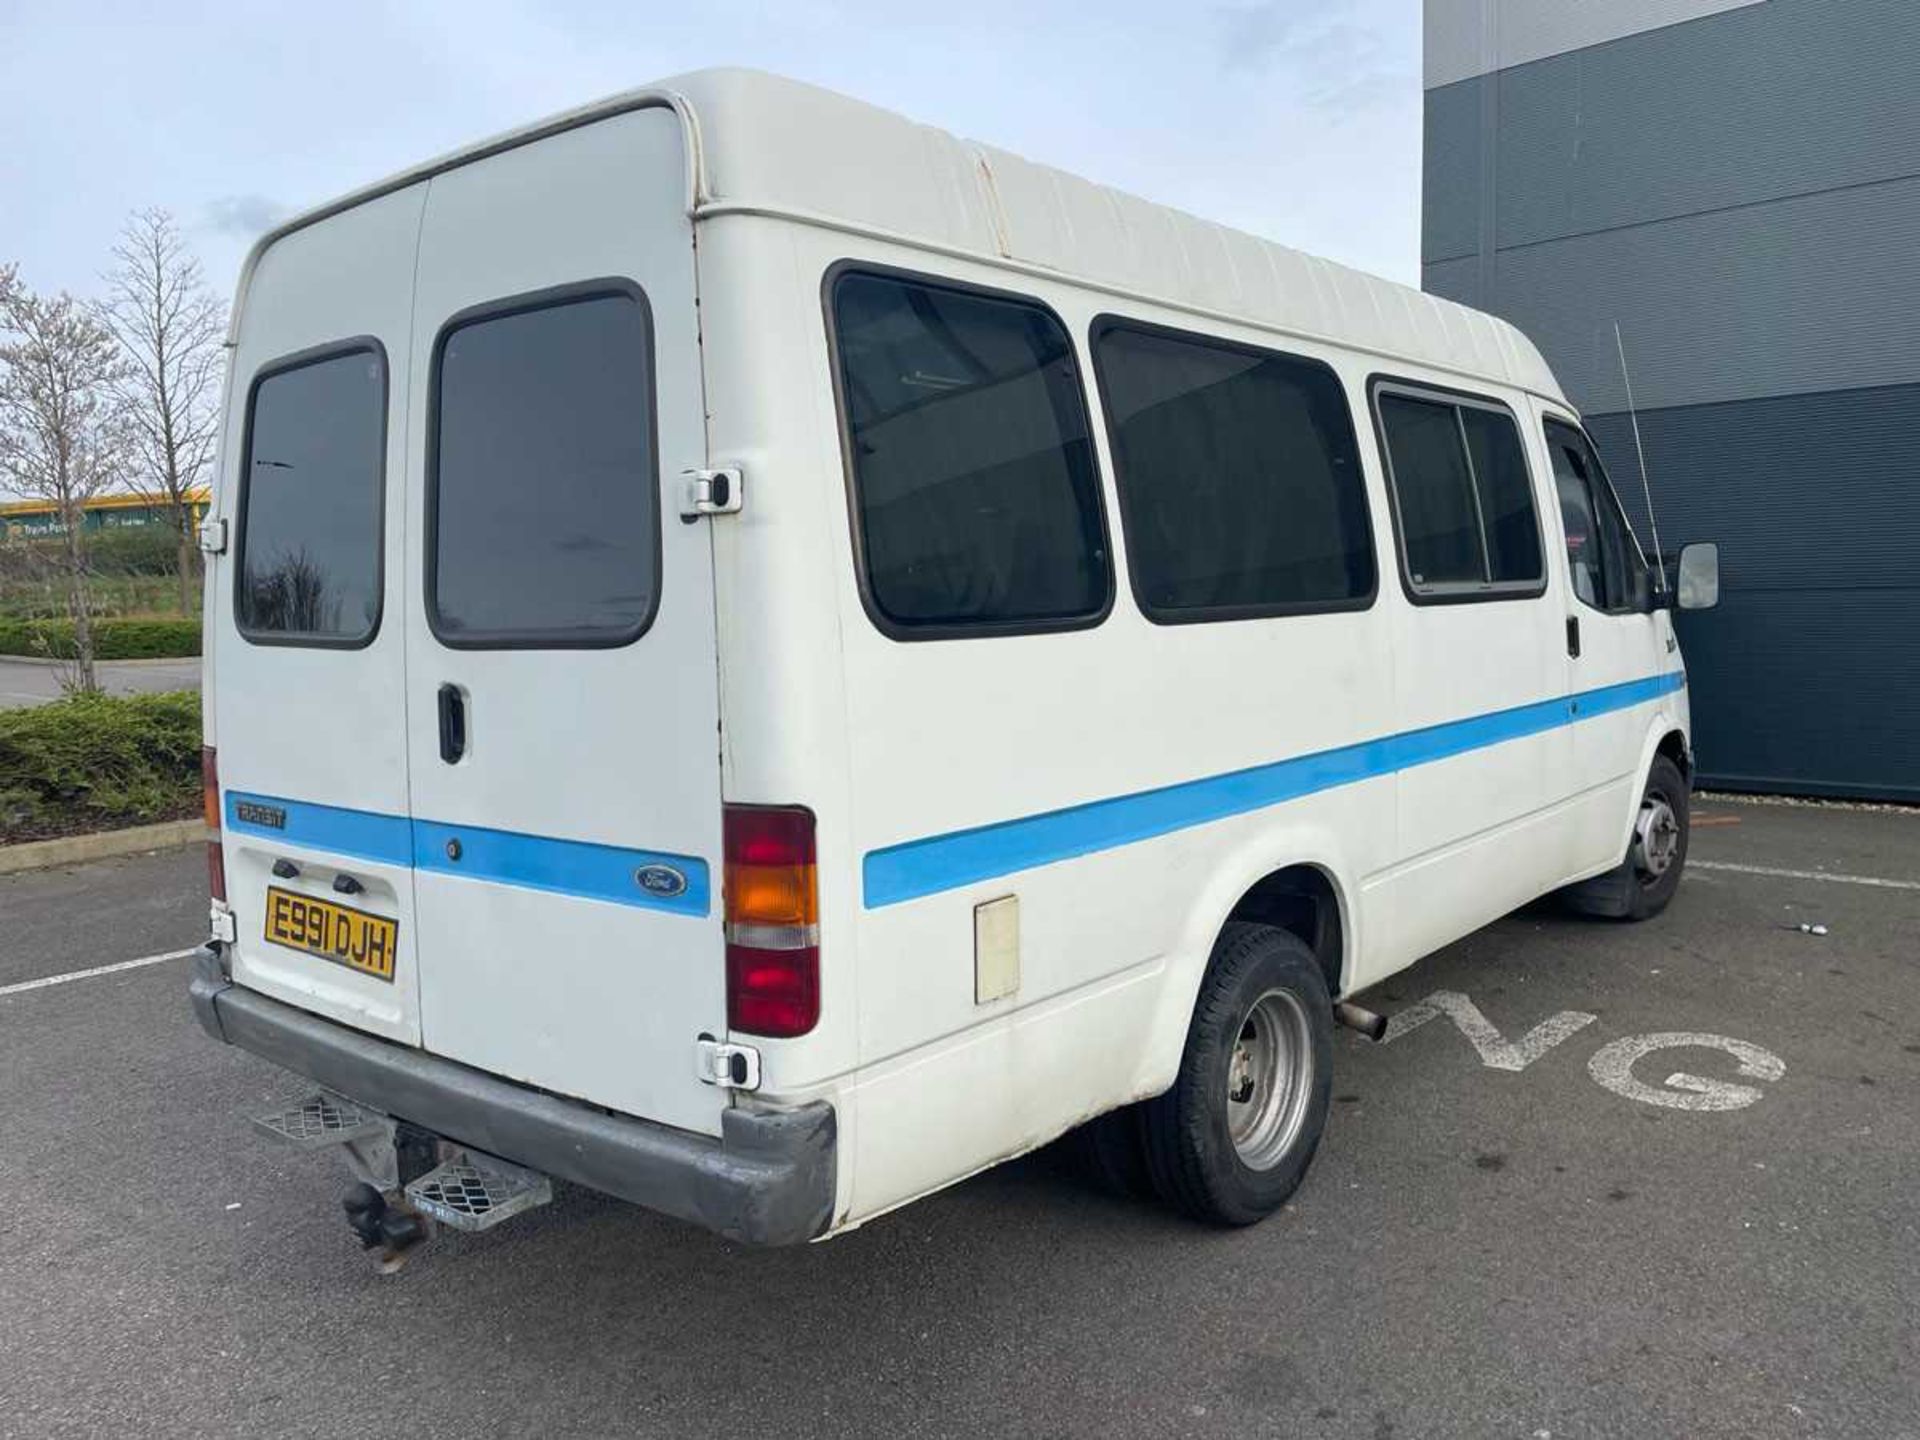 (E991 DJH) 1987 Ford Transit Mk. III day / race / camper van - converted from 150 minibus, 2500cc - Bild 6 aus 7